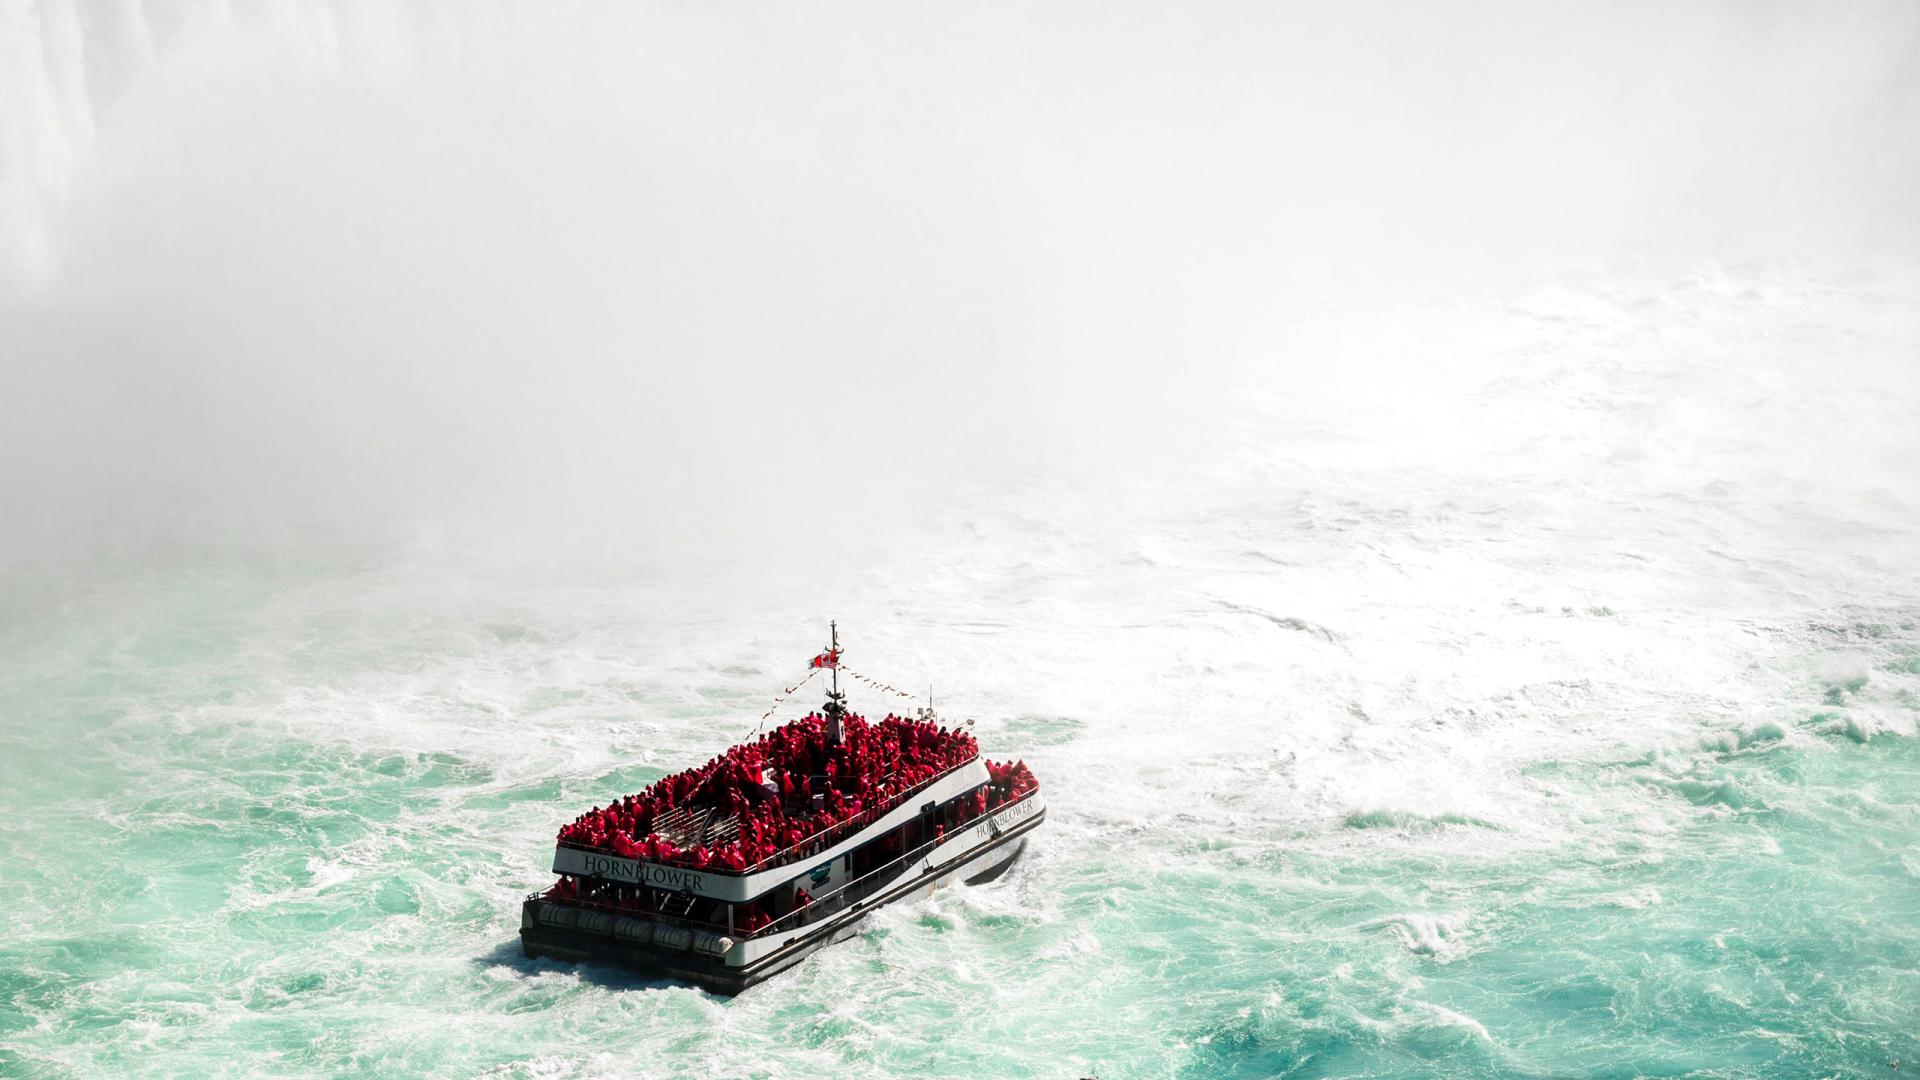 Niagara Falls Tourists on Boat